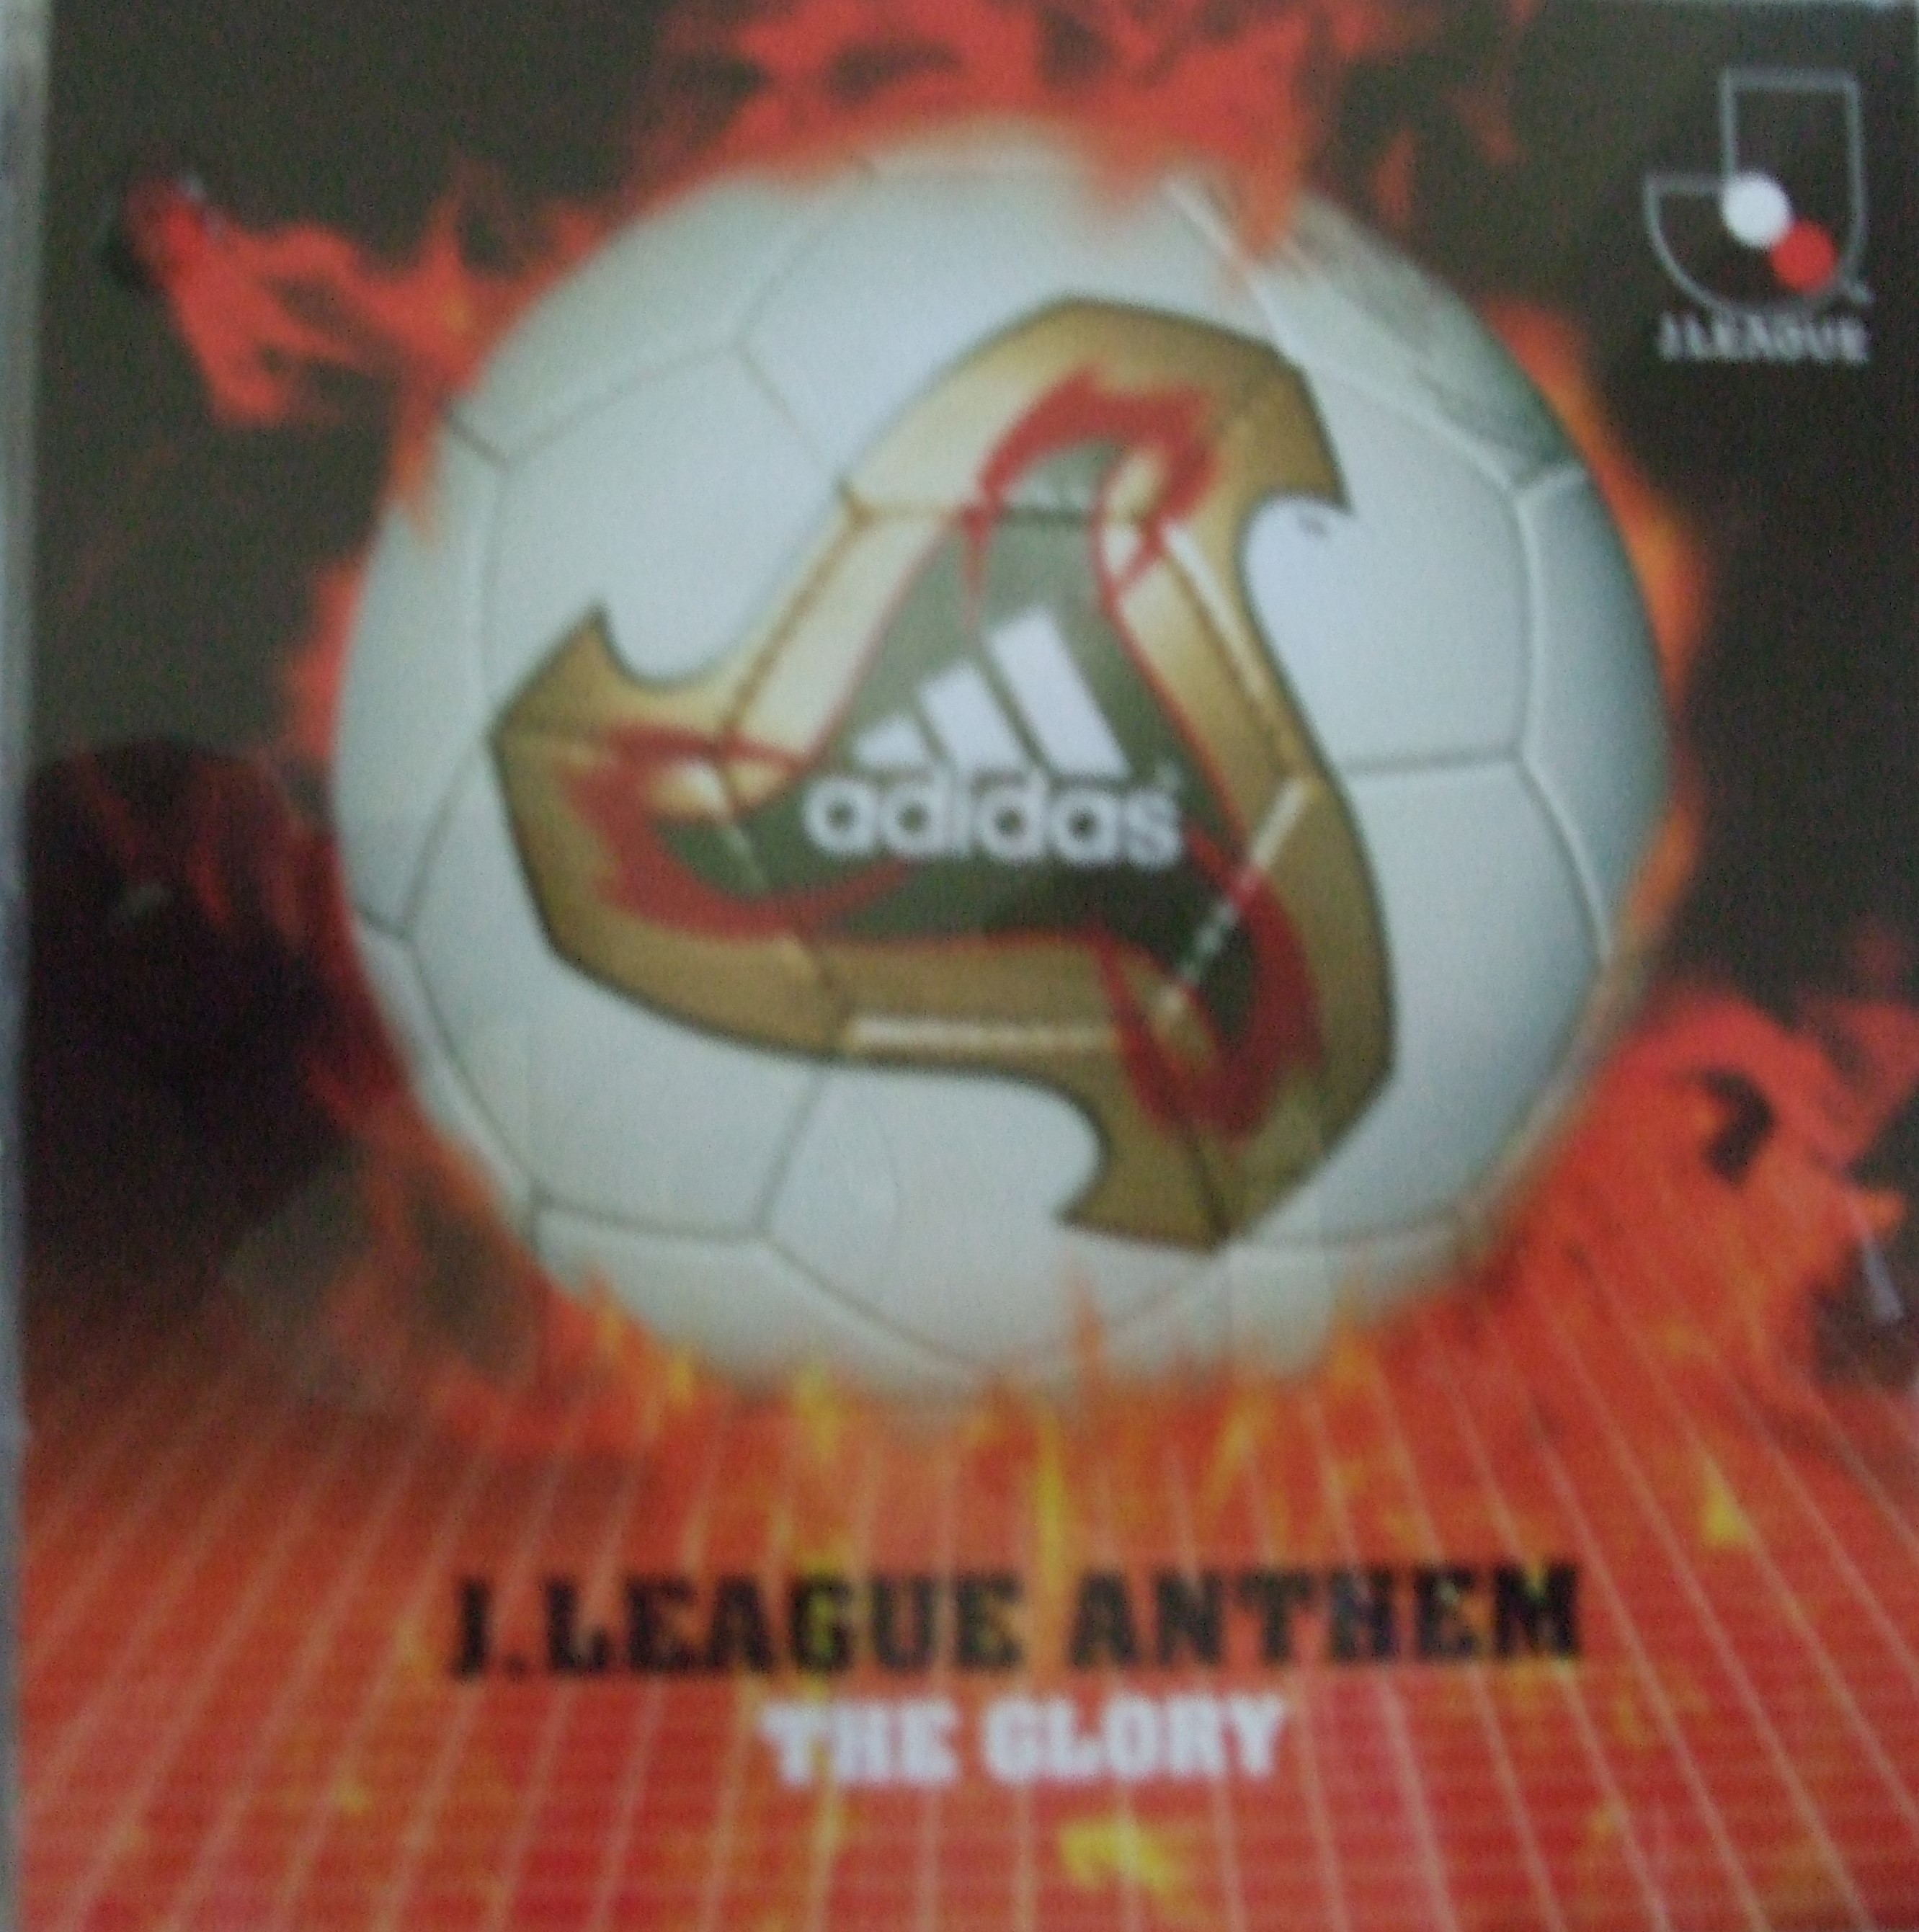 Sports Goods Mania 中古 美品 サッカーｃｄ ｄｖｄ ｊリーグ アンセム ｔｈｅ ｇｌｏｒｙ J League Anthem The Glory